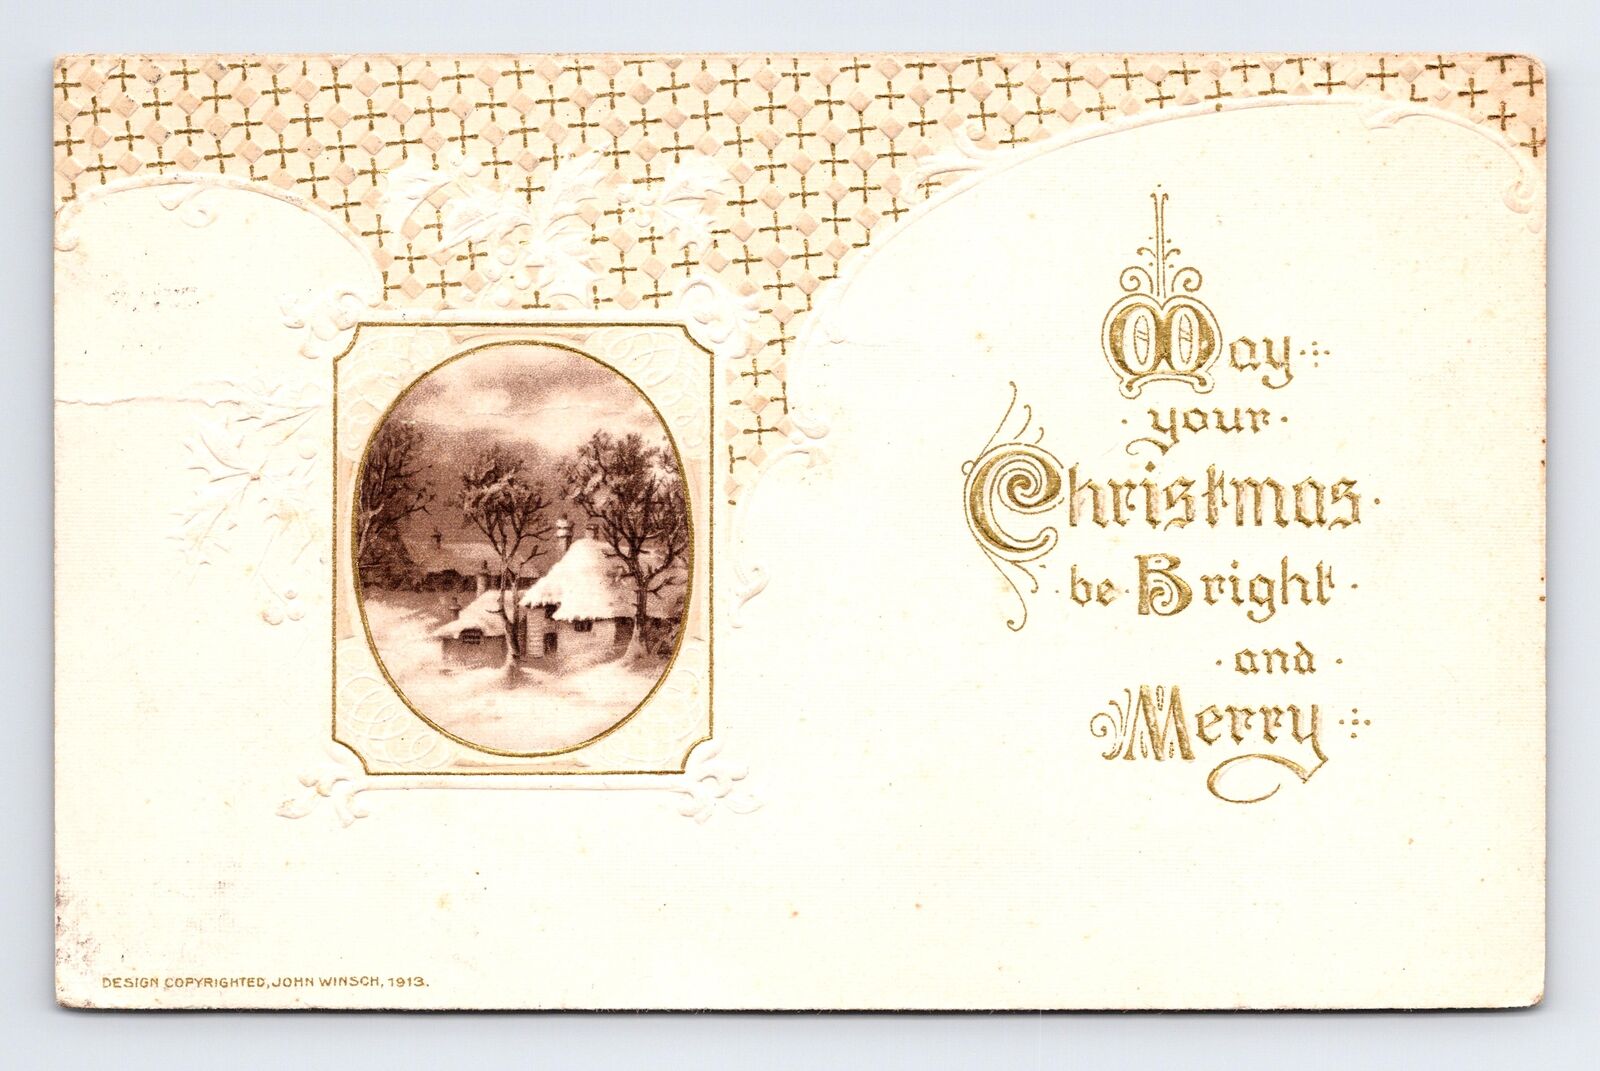 c1913 Postcard John Winsch Back Bright Merry Christmas Embossed